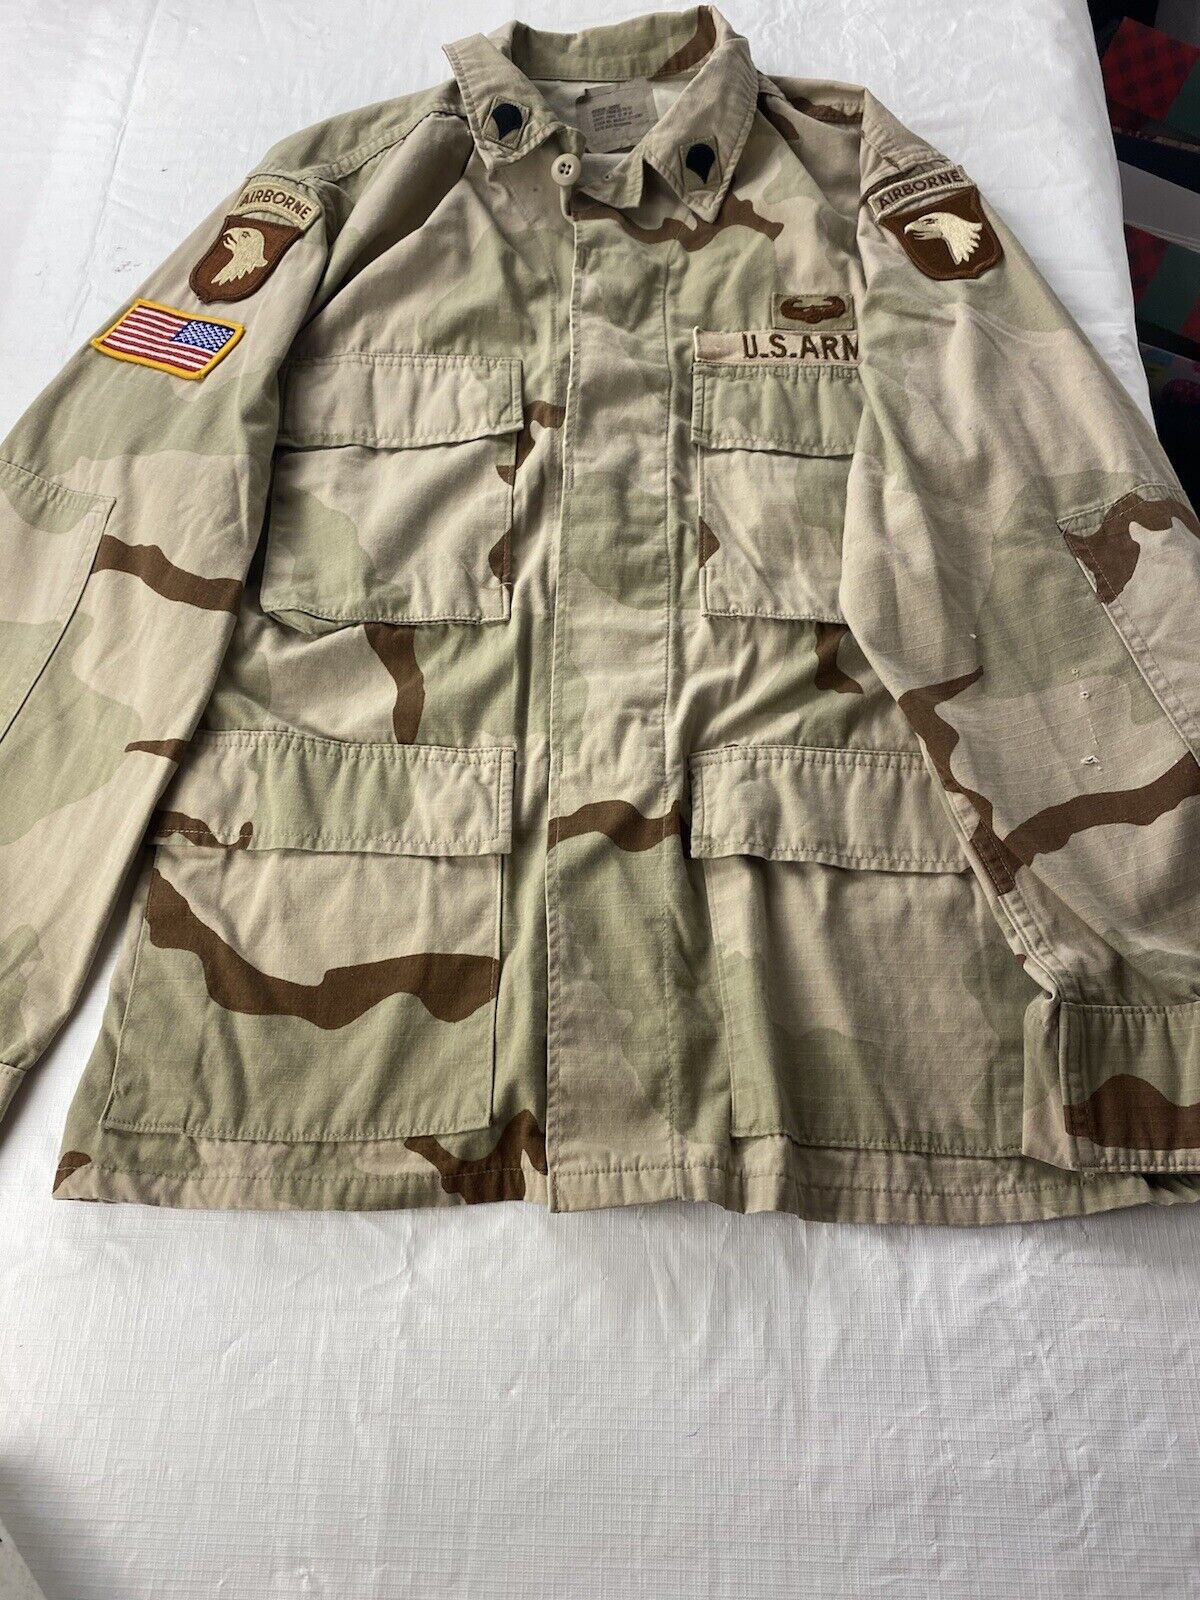 United States Army Airborne Camouflage Jacket Size Medium Short Patches Wartime